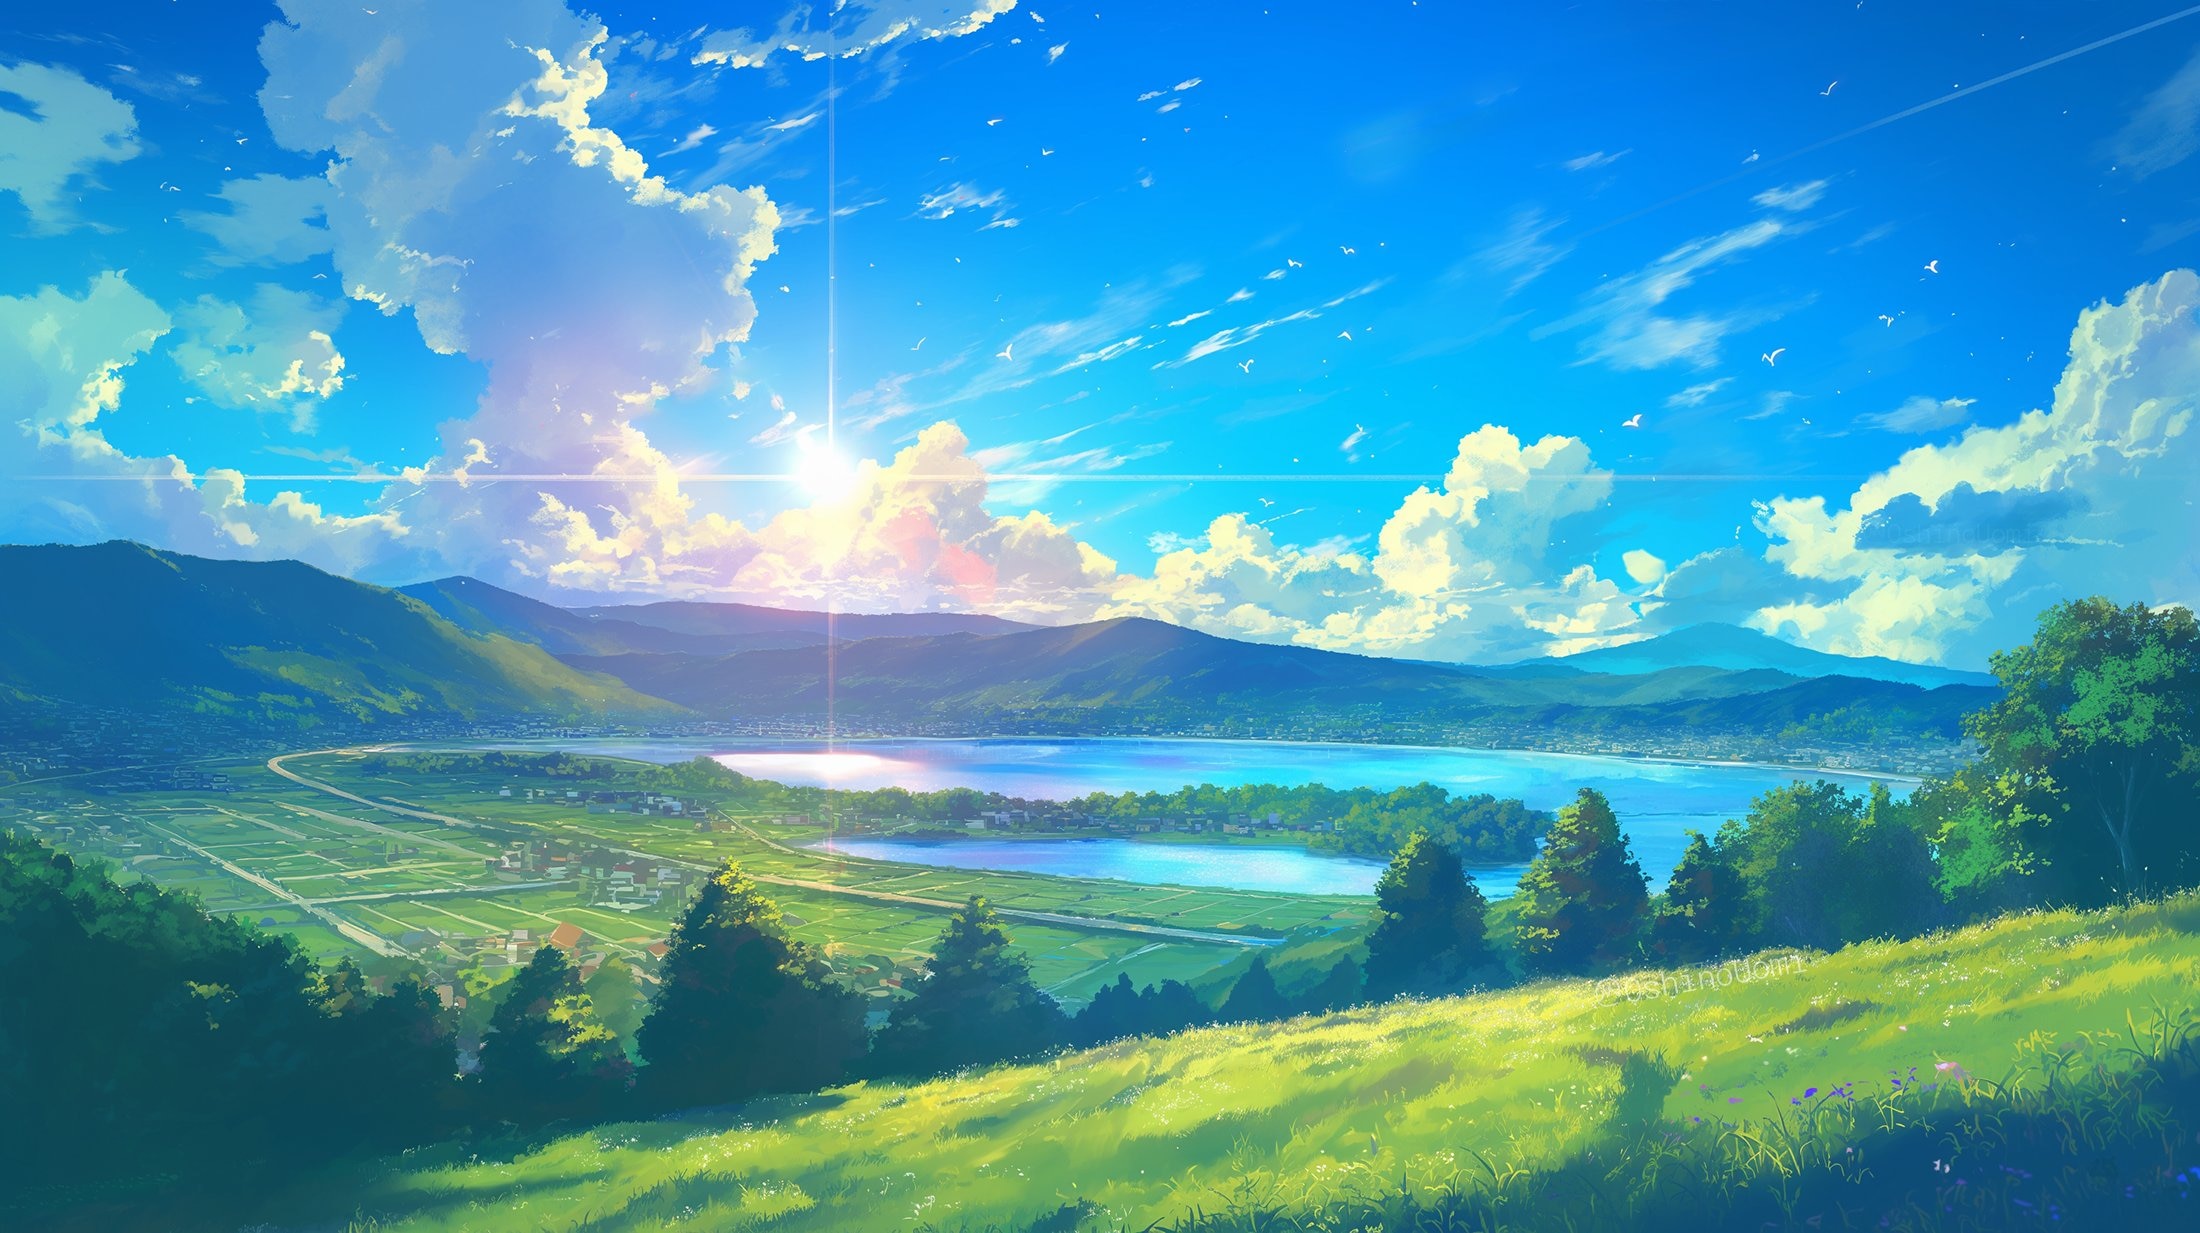 Anime Artwork Landscape Digital Art Clouds Sky Trees Grass Far View Lake Road Sunlight Mountains Uom 2200x1233